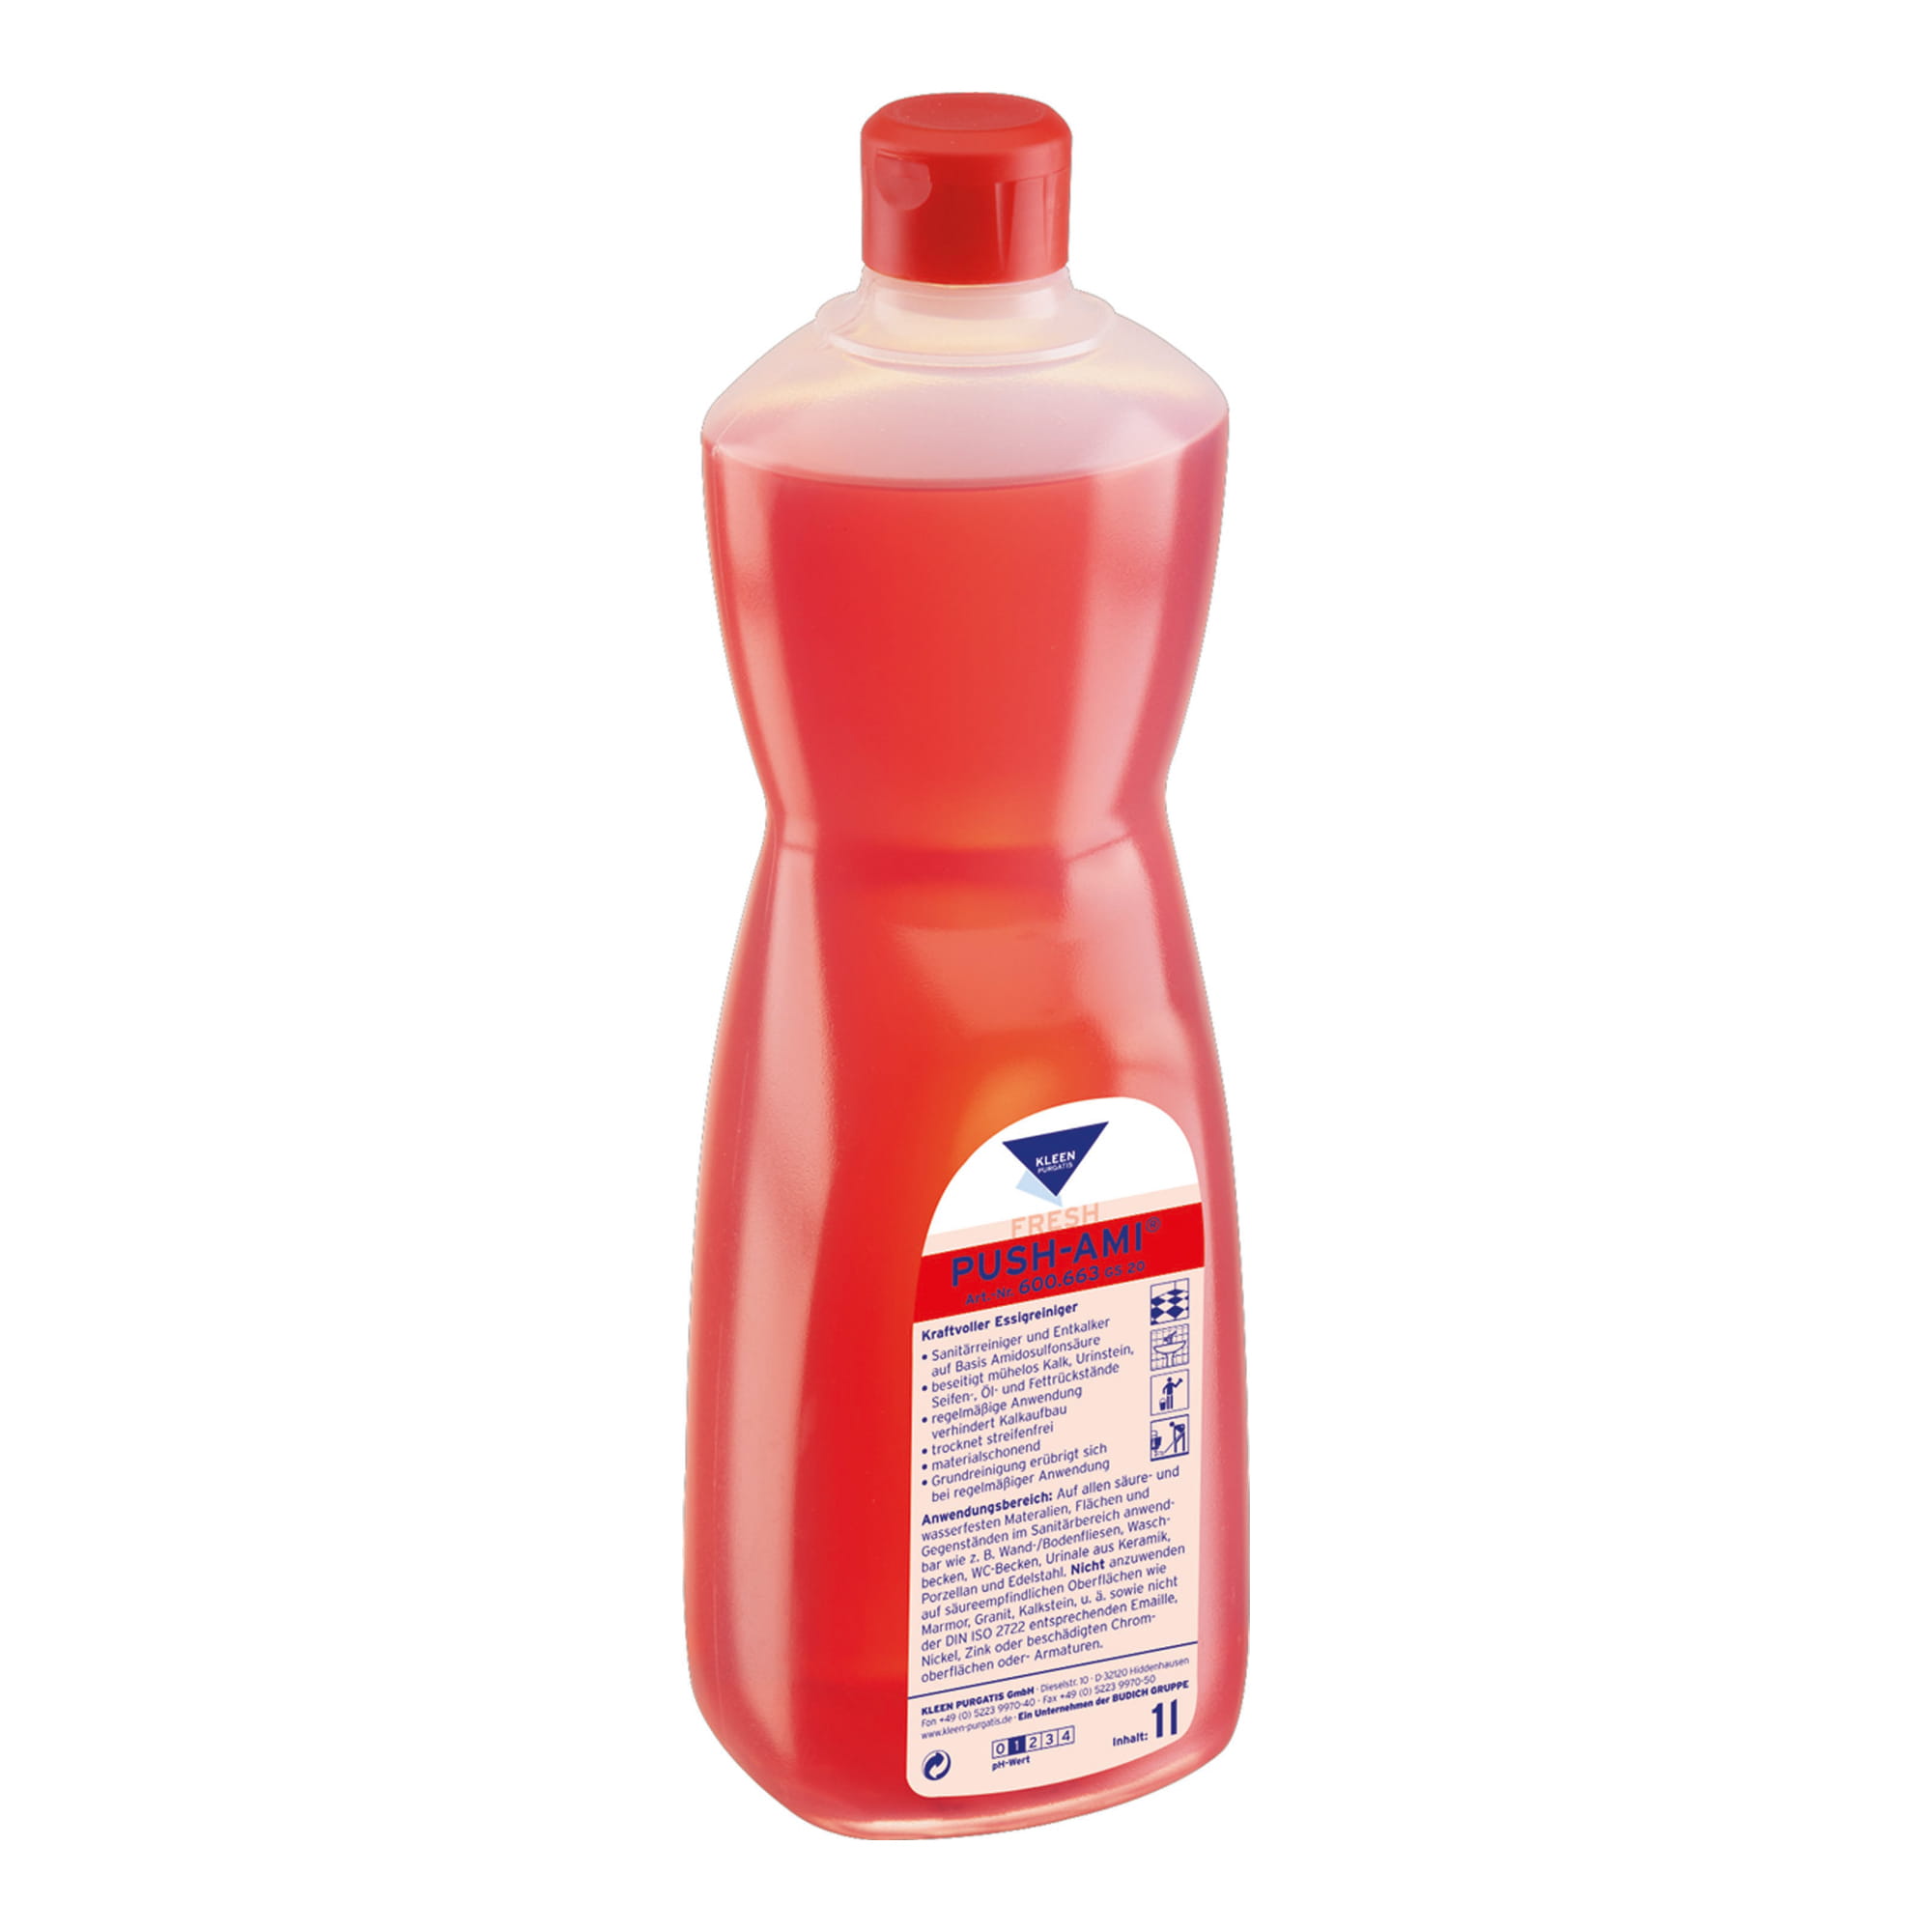 Kleen Purgatis Push-Ami Sanitärunterhaltsreiniger 1 Liter Flasche 90600663_1